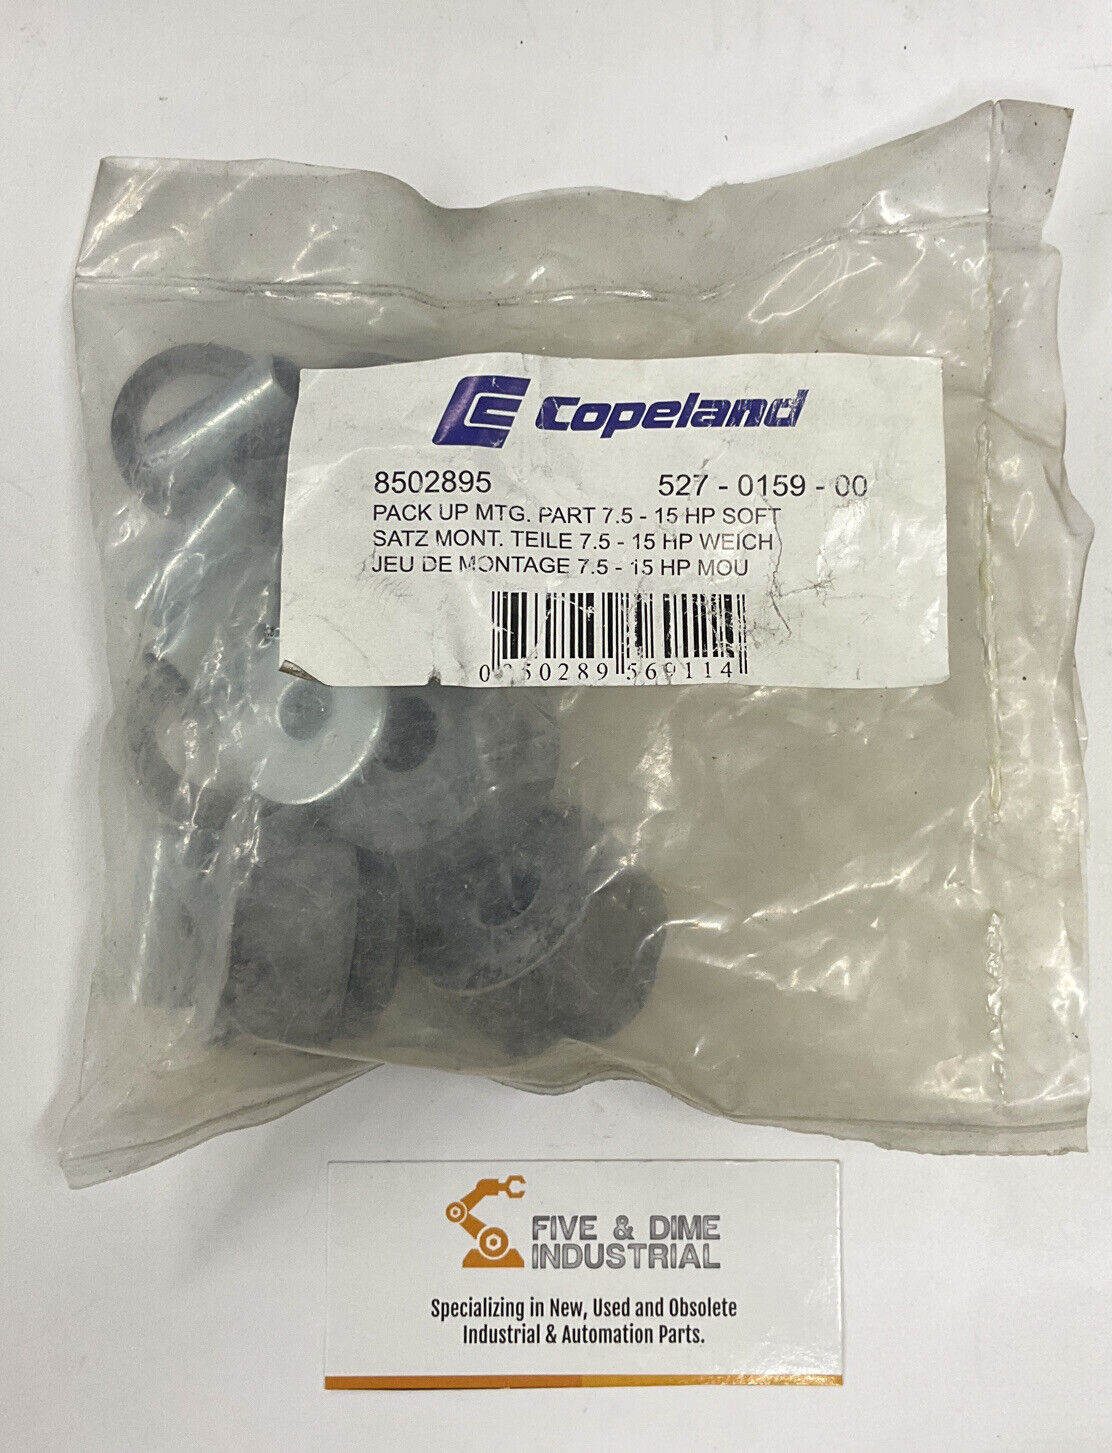 Copeland 527-0159-00 Compressor Mounting Kit 7.5 - 15HP Soft (BK141)